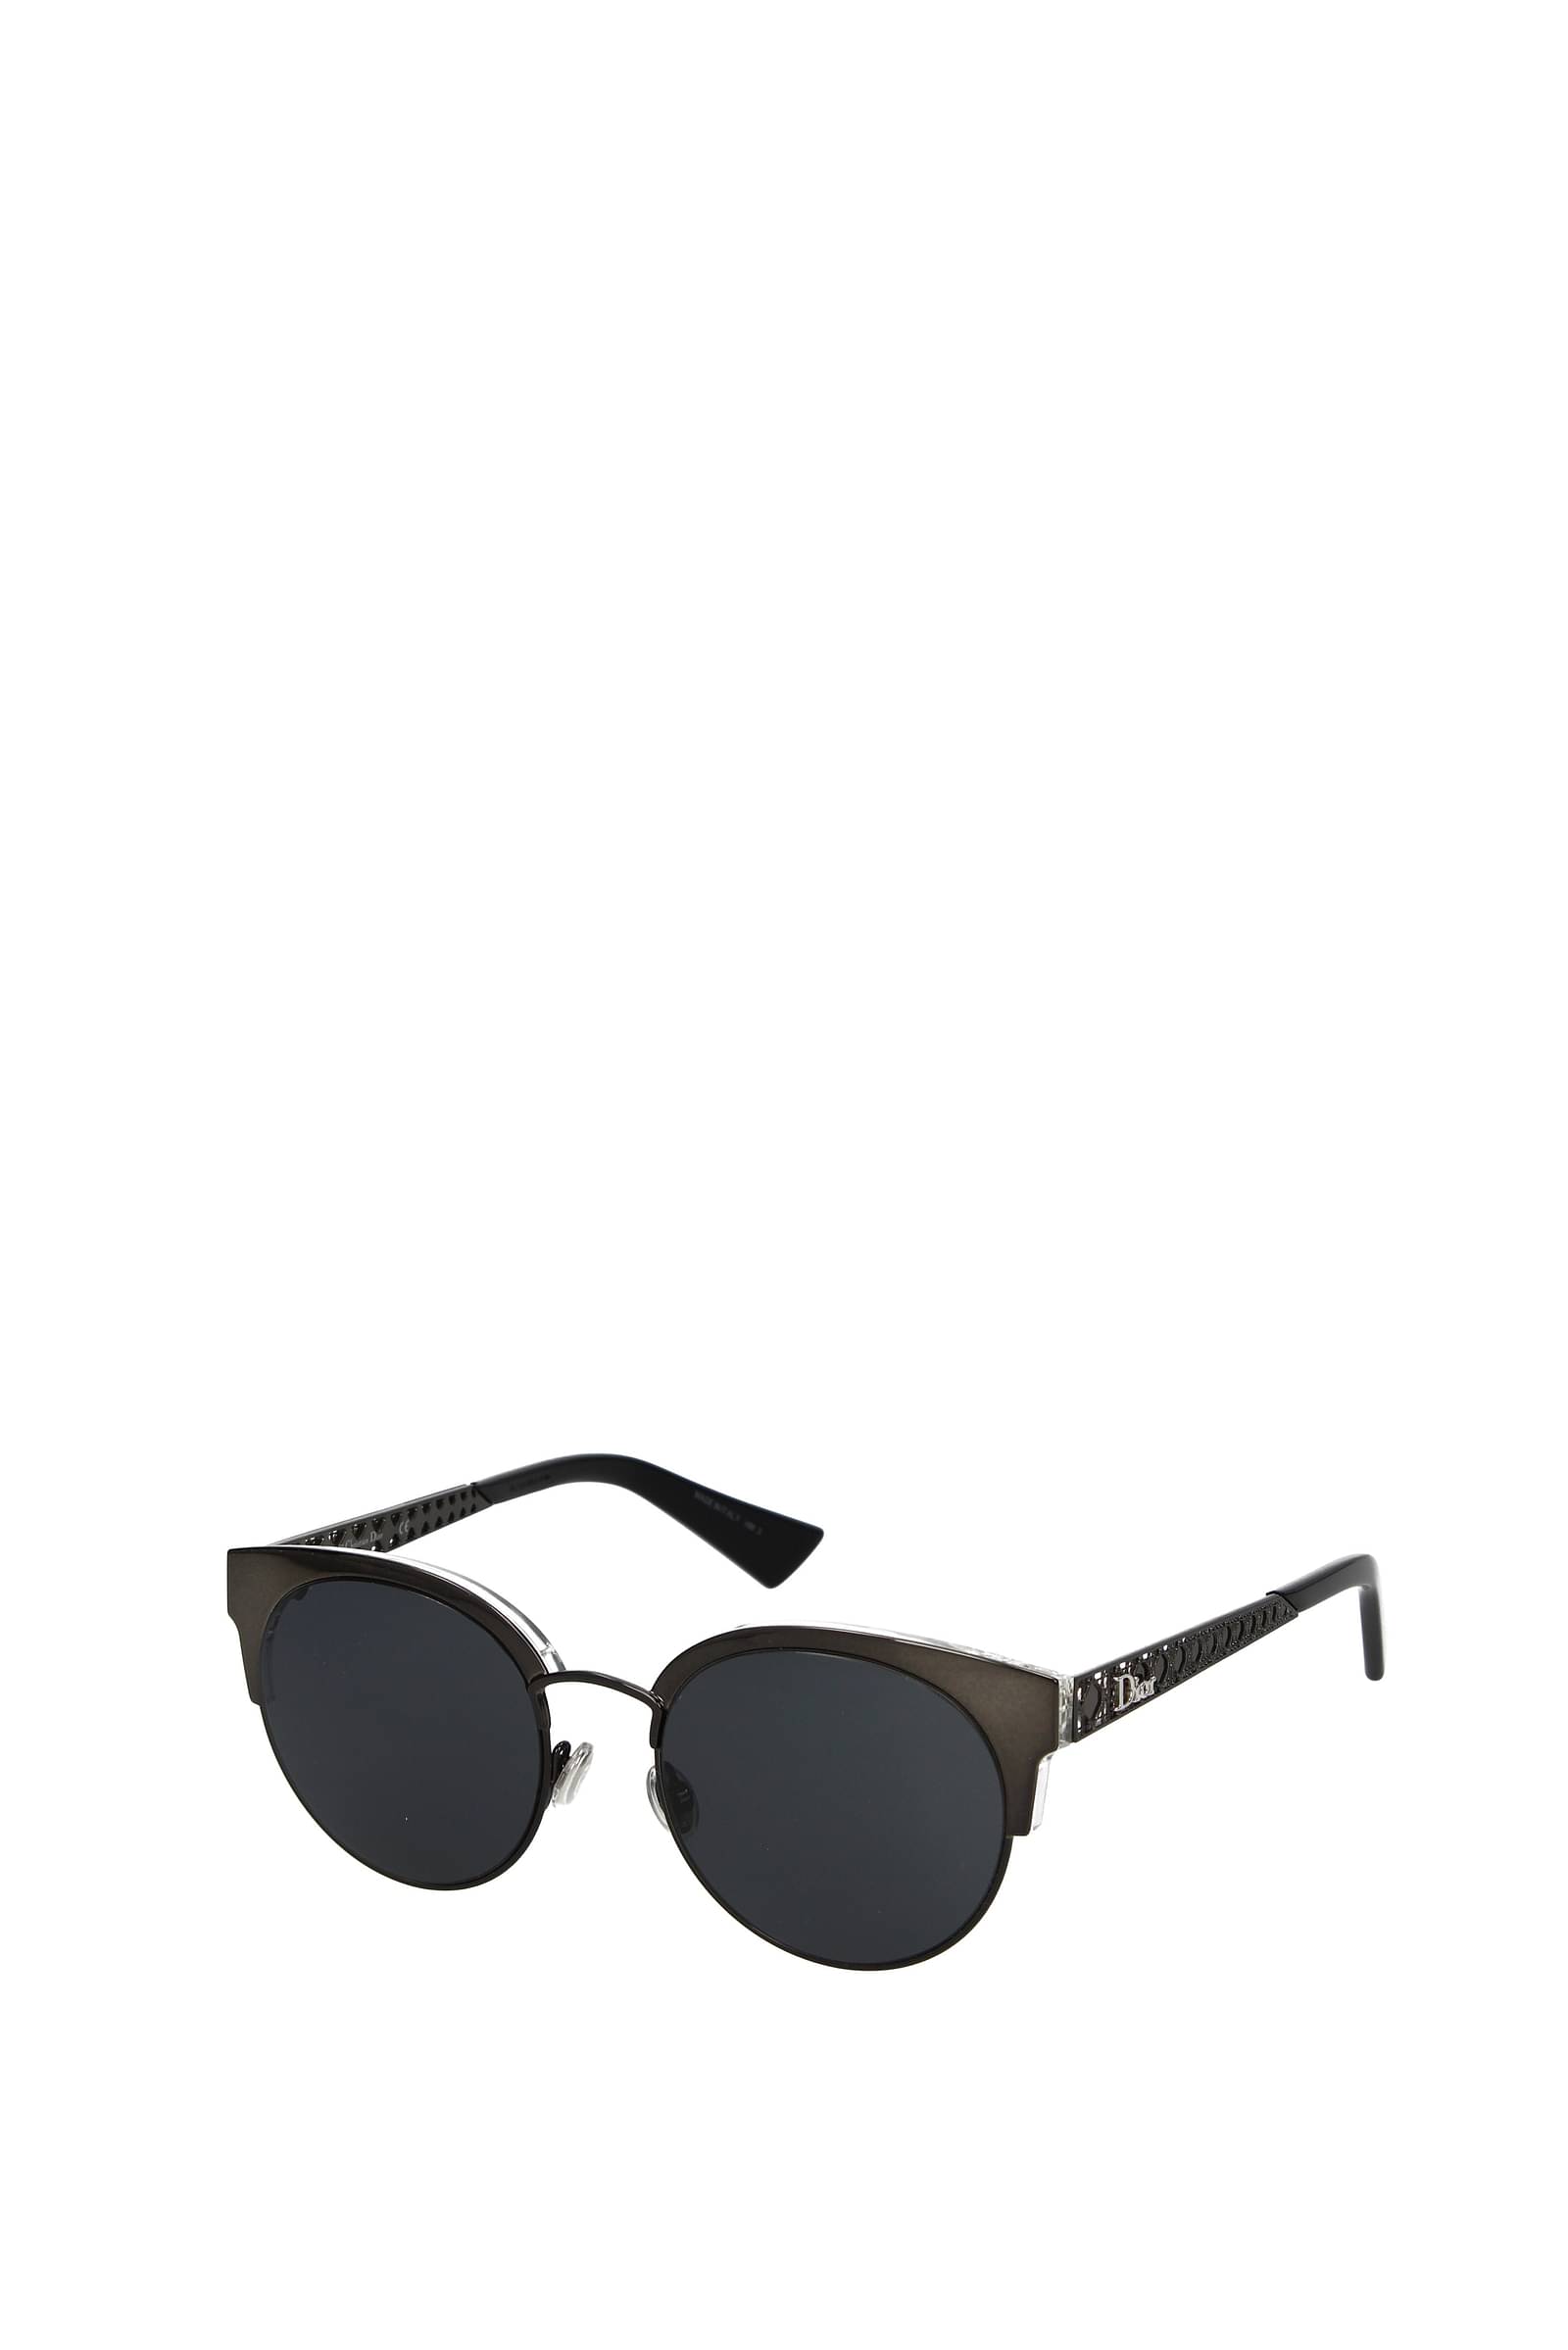 Sunglasses Metal Gray Black - Christian Dior - Women